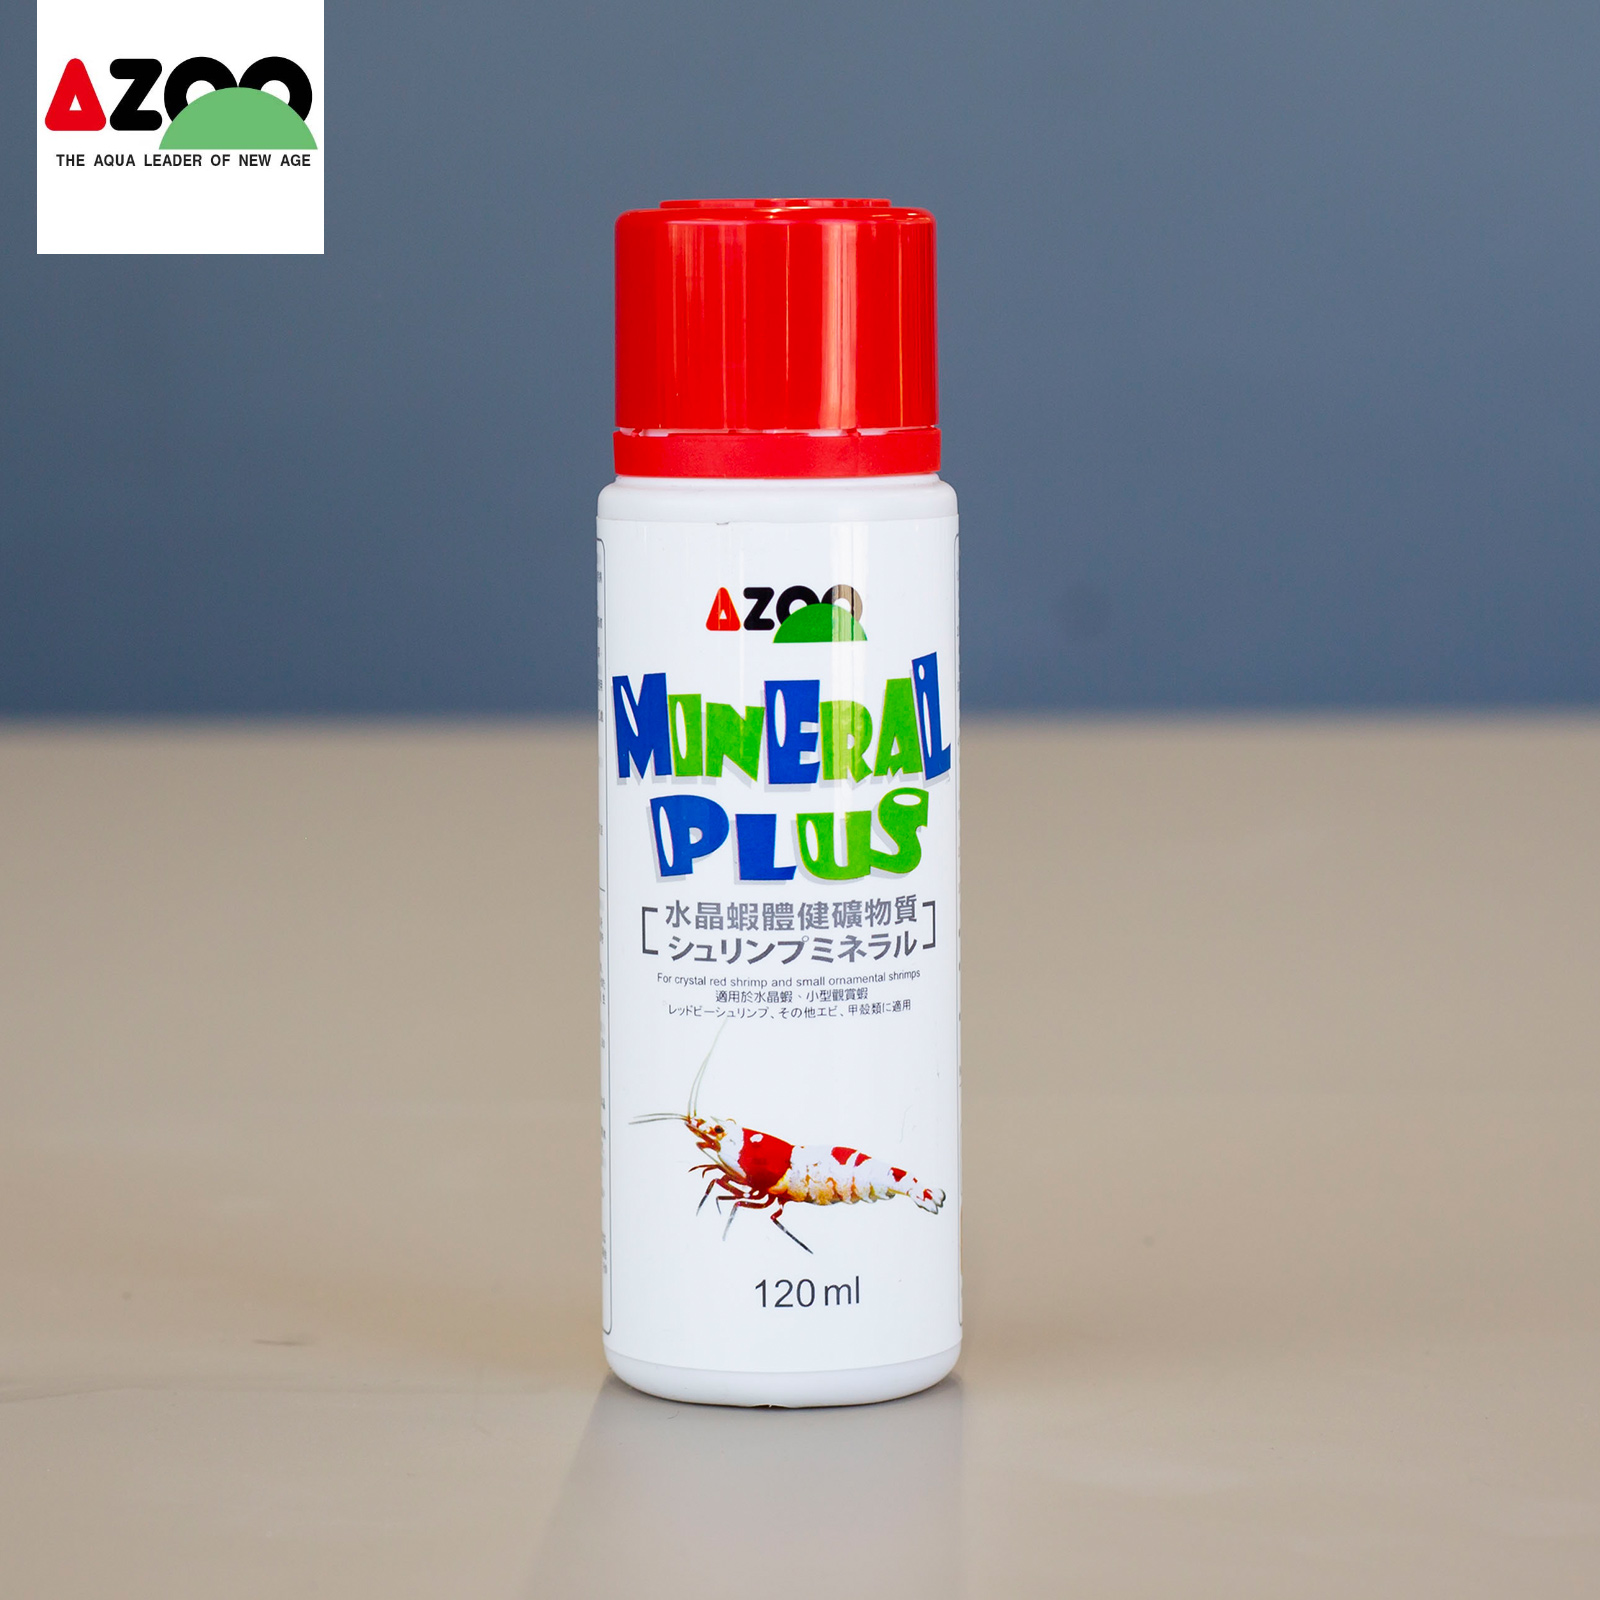 AZOO Mineral Plus 120ml